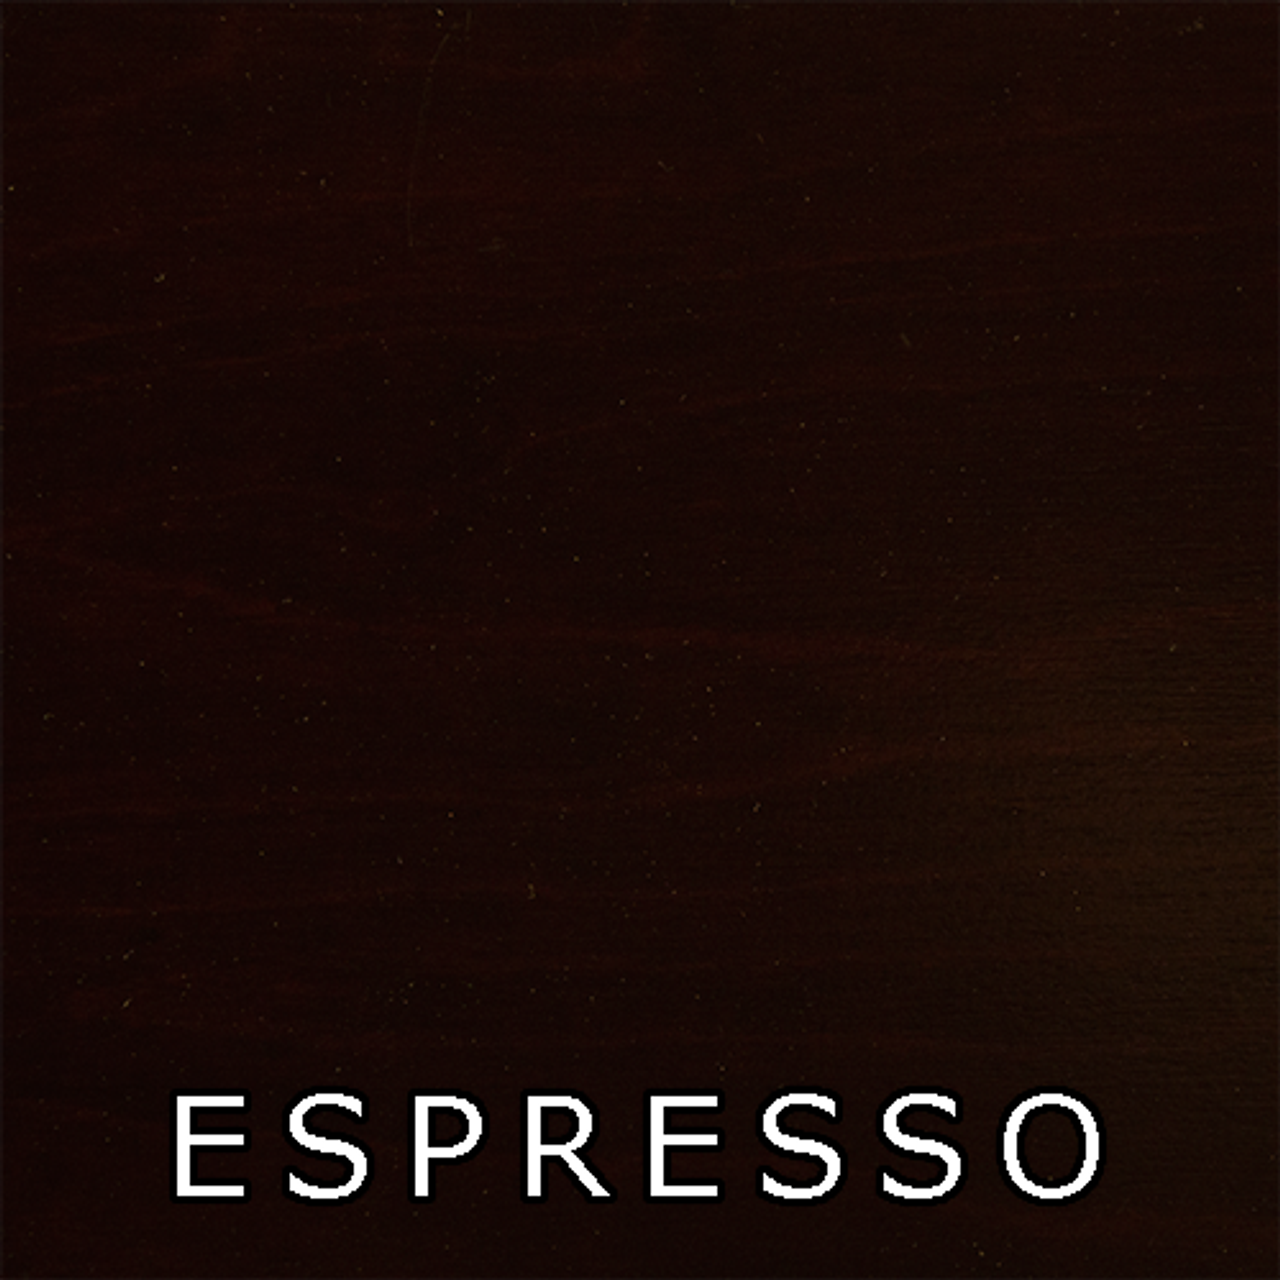 espresso color